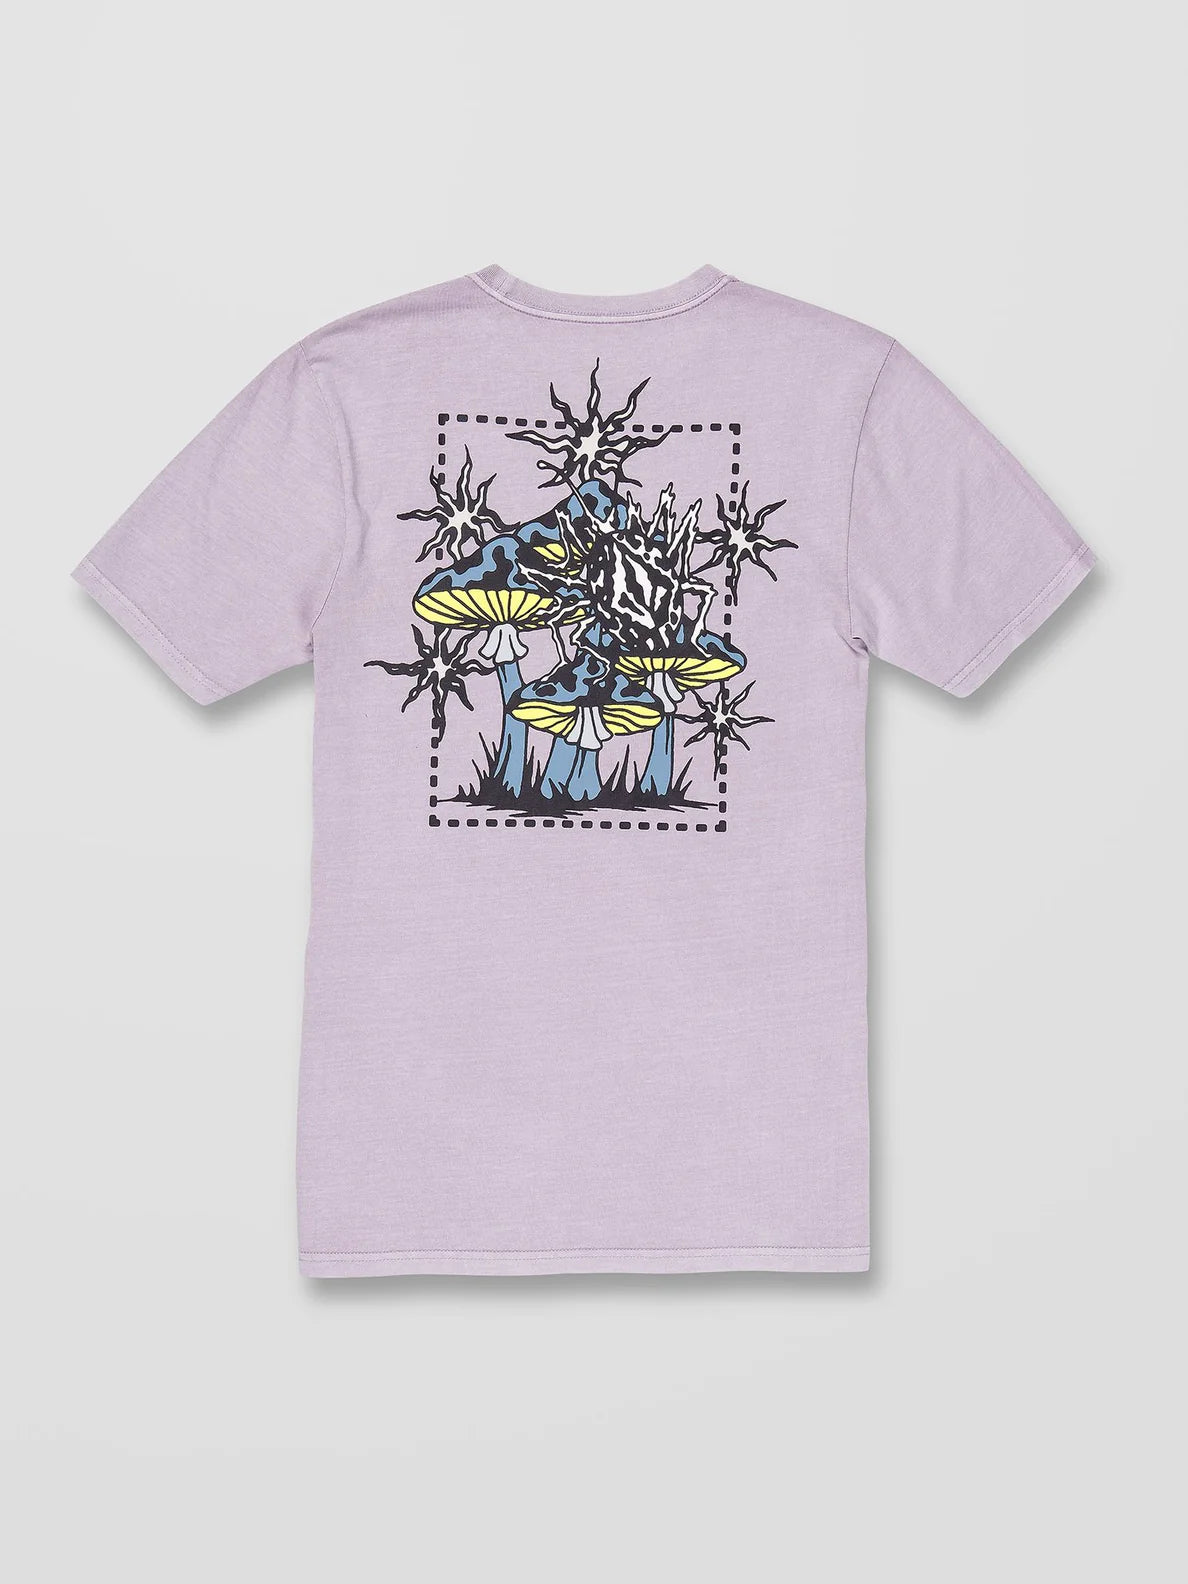 Camiseta Volcom Widgets Nirvana | surfdevils.com